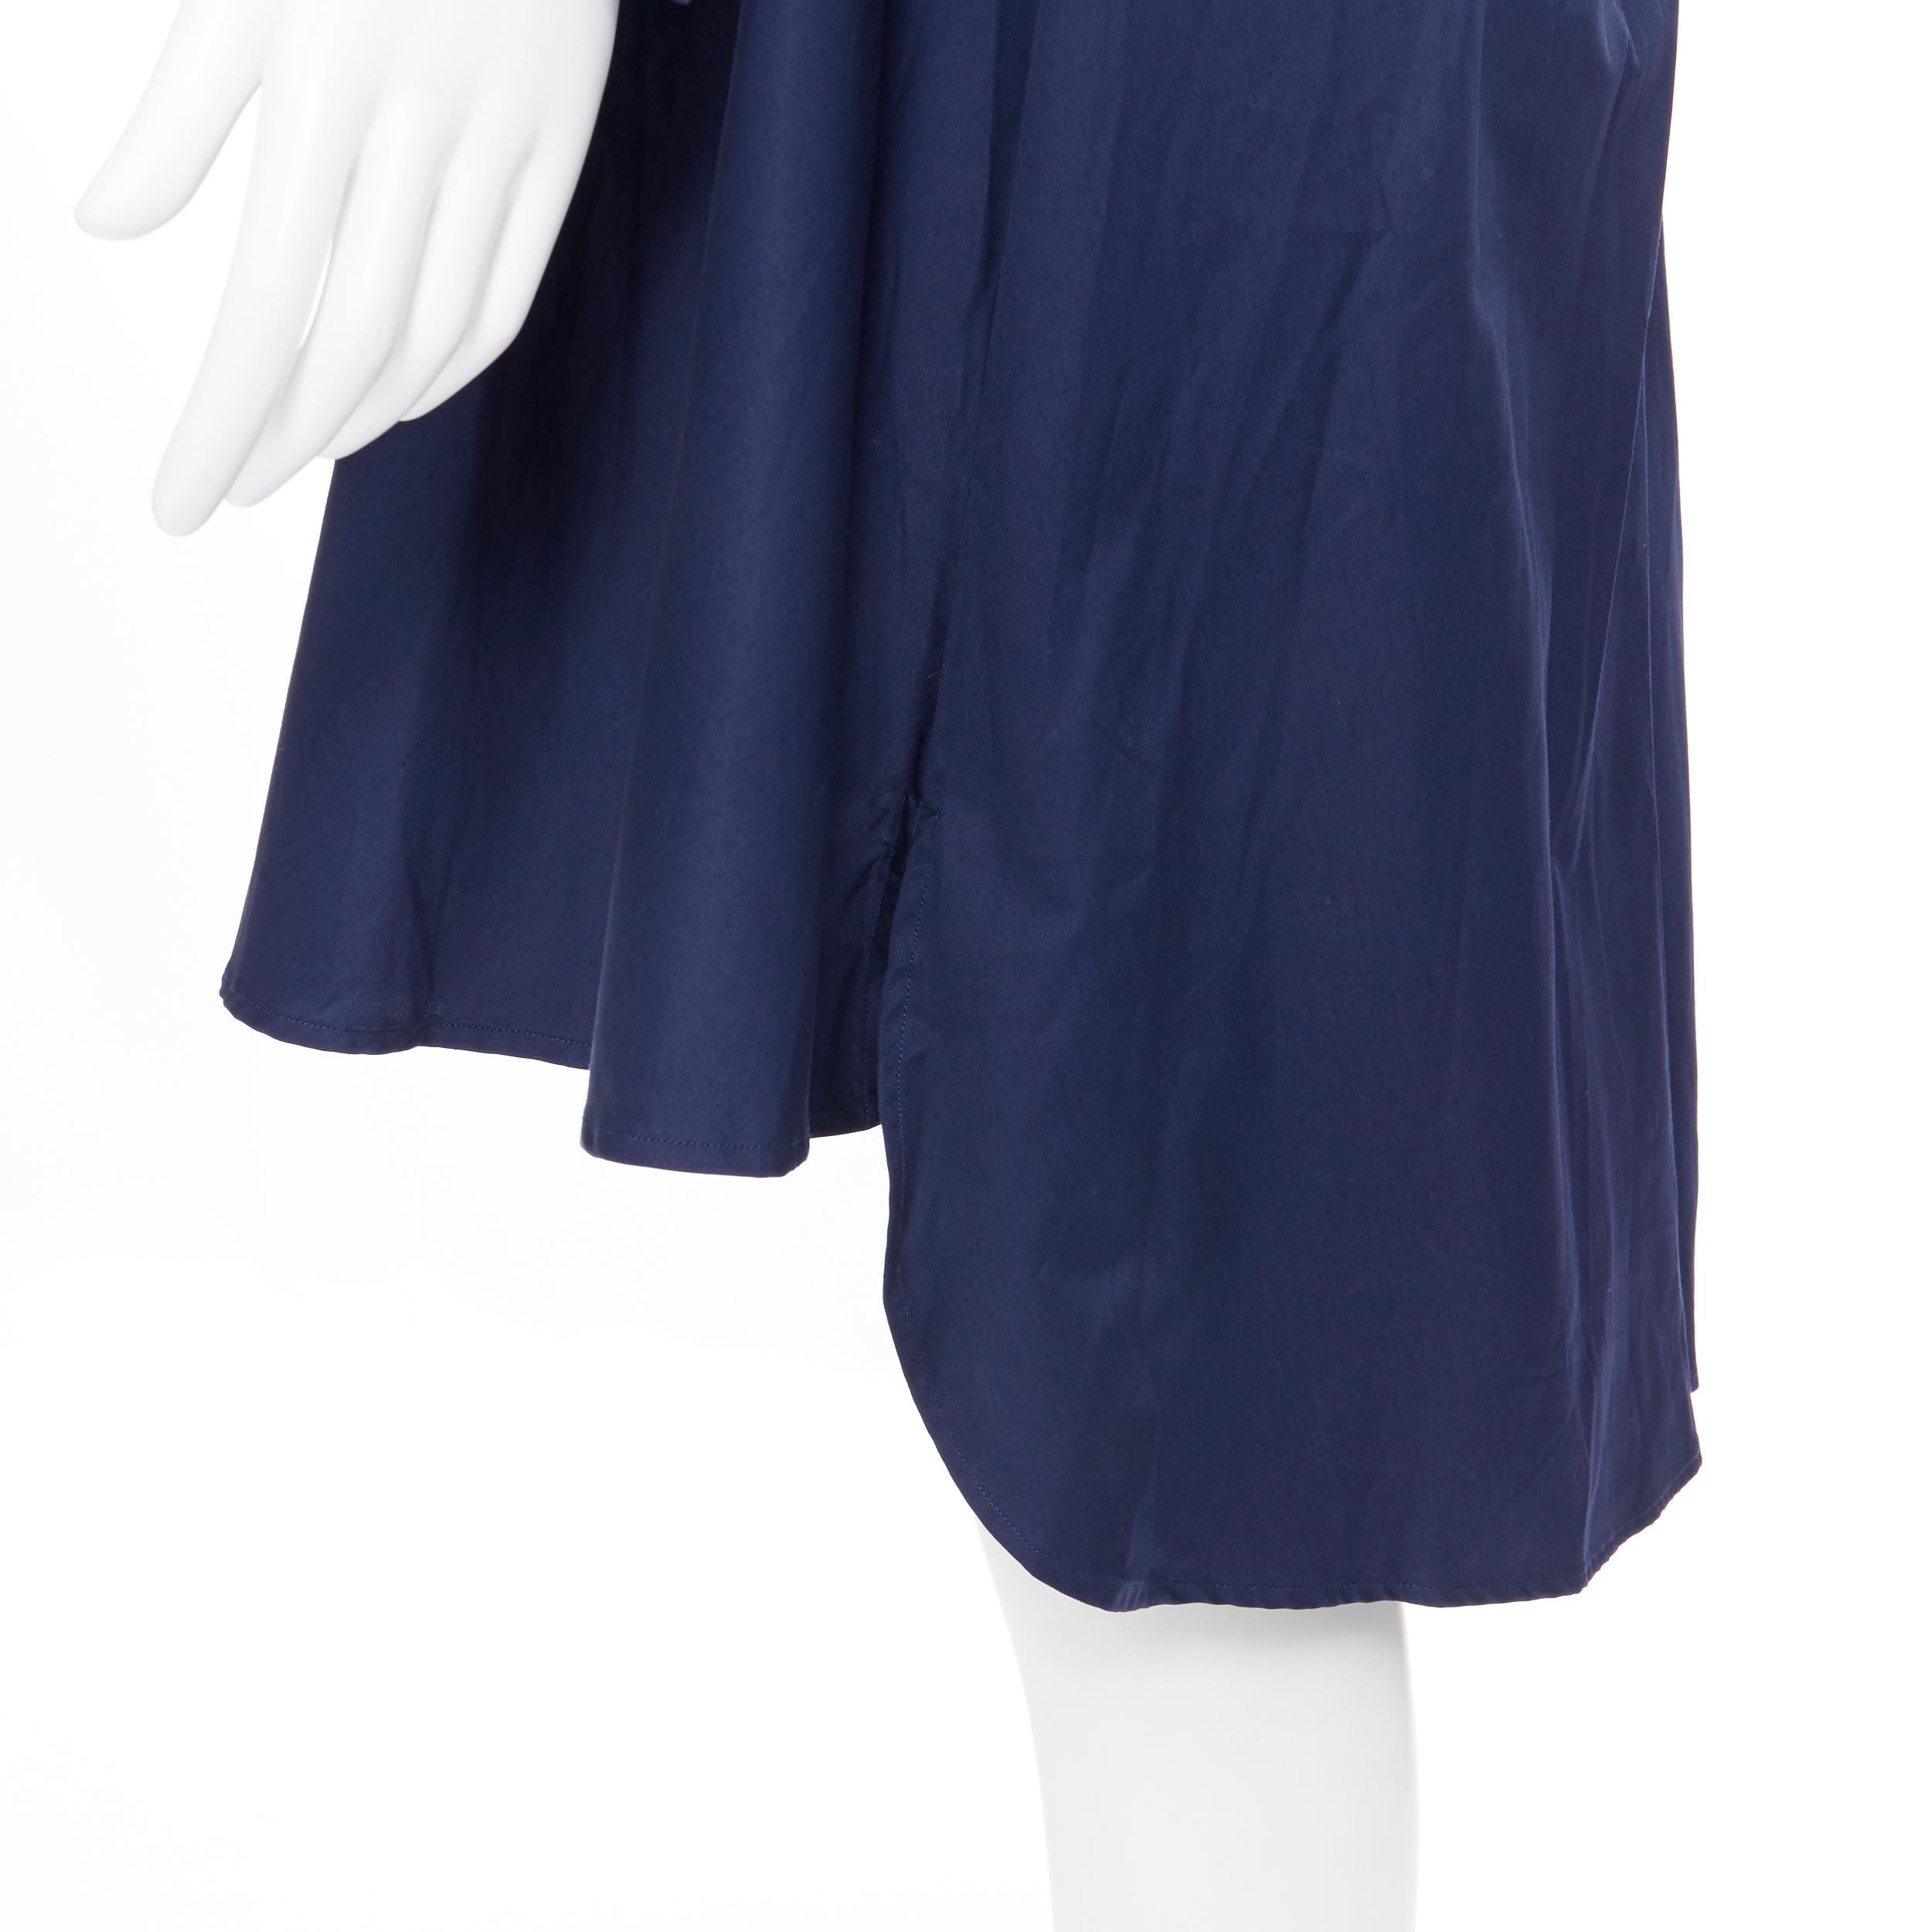 PALMER HARDING 100% cotton navy blue fit flare casual cotton dress UK8 XS 2